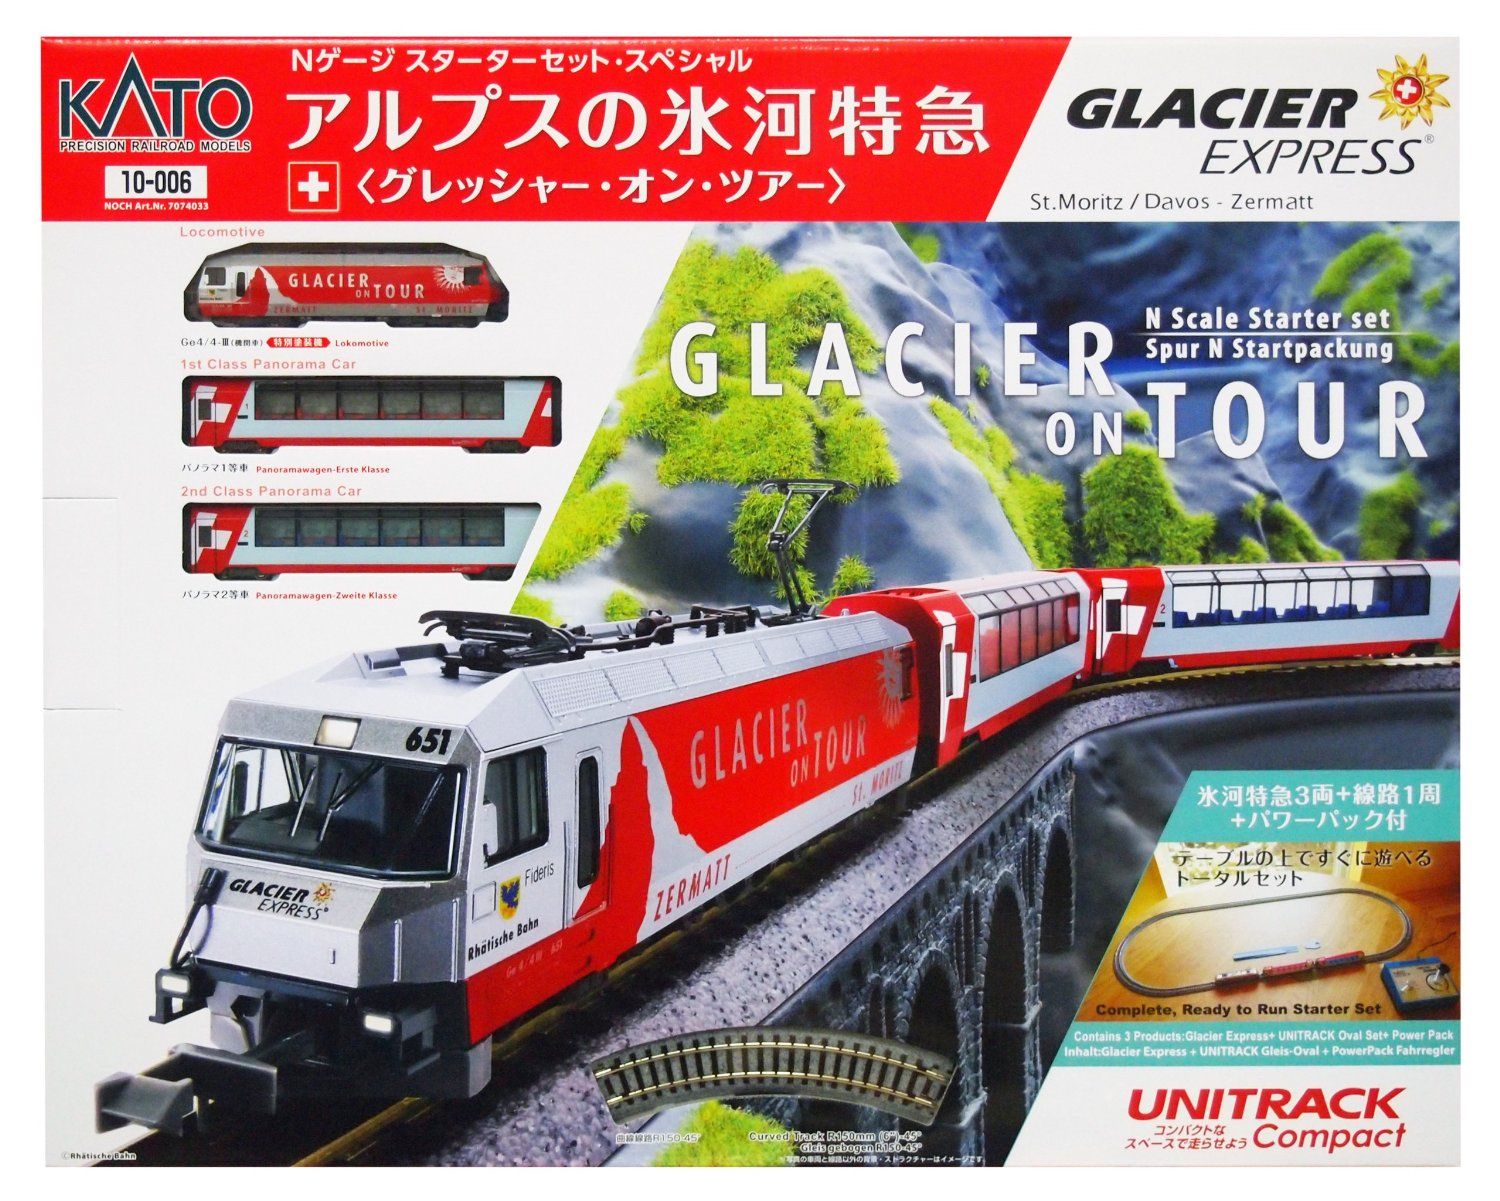 KATO 10-006 Starter Set SP Alps Glacier Train : Glacier on Tour - BanzaiHobby